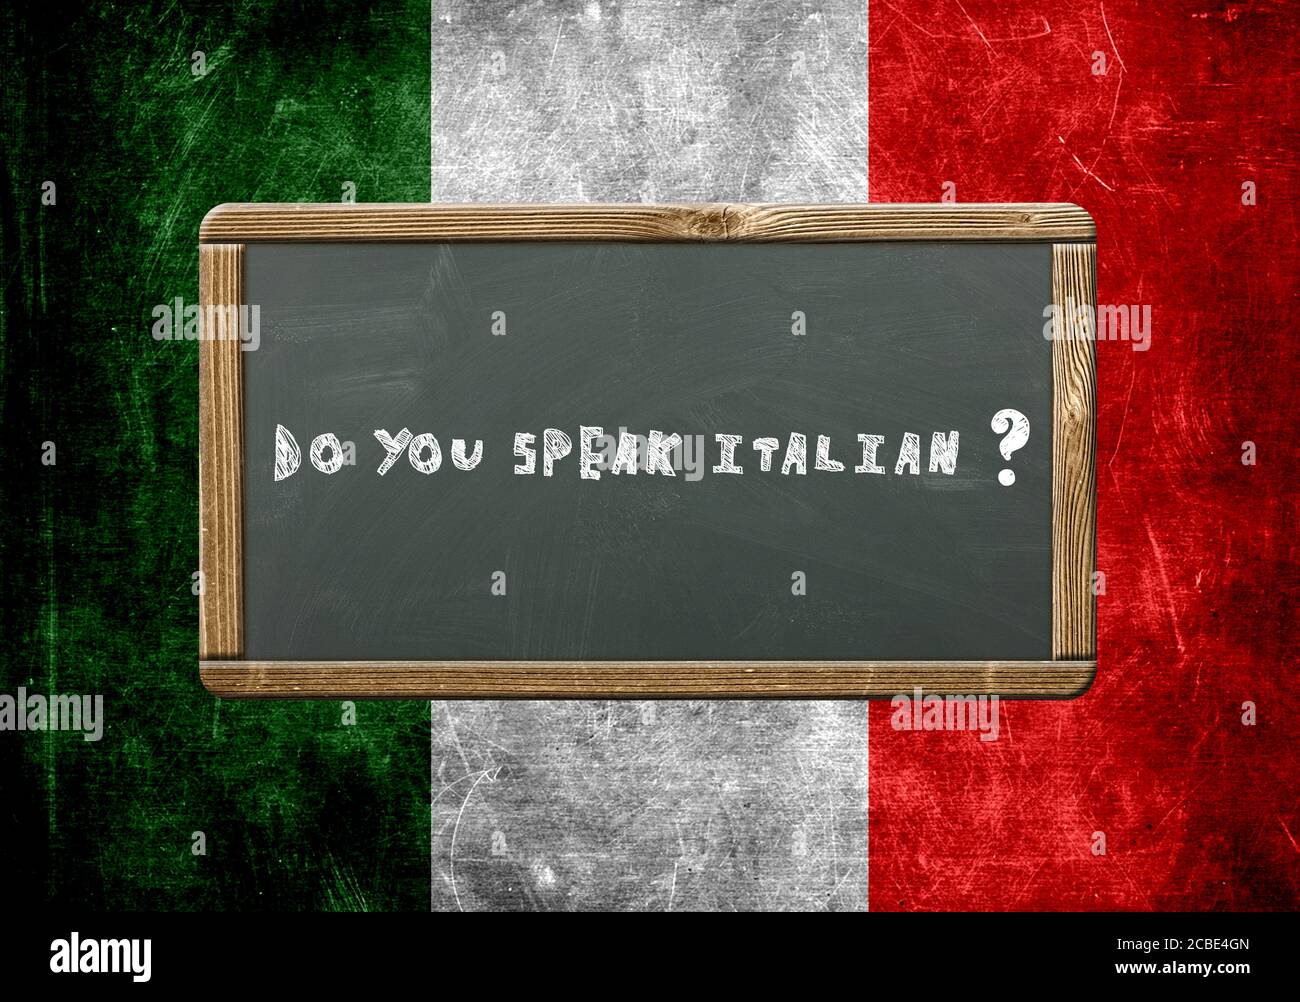 Do you speak italian Stock Photo